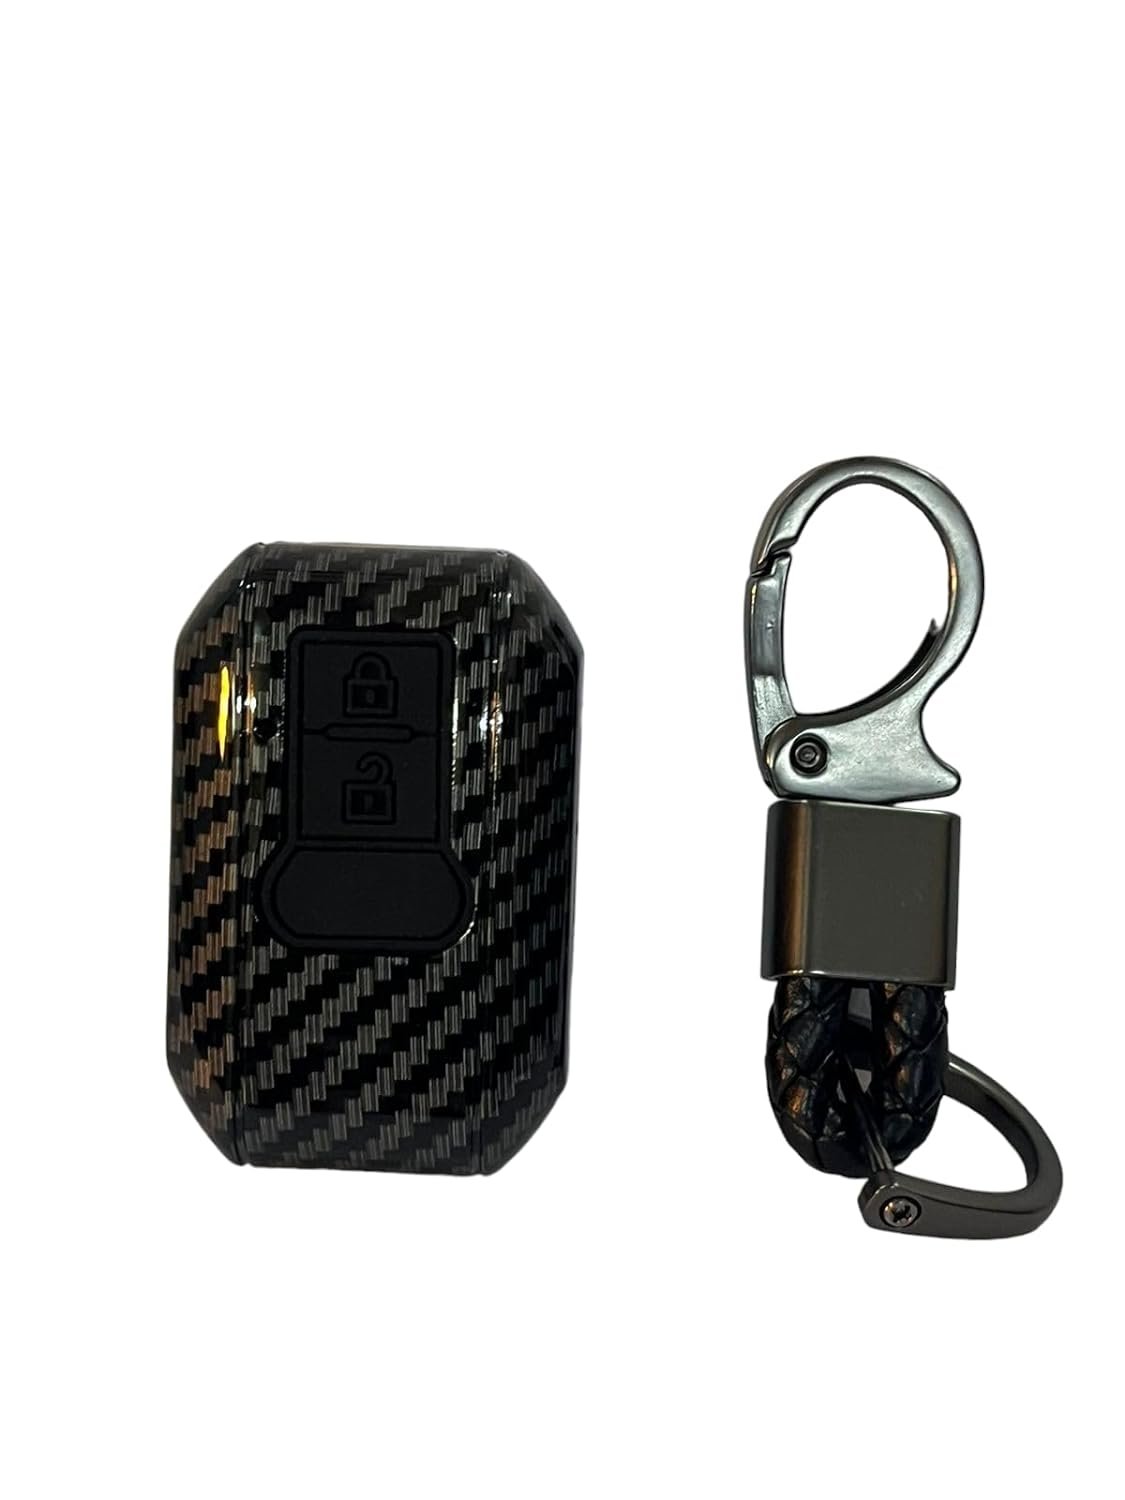 Carbon Fiber ABS Car Key Cover Compatible with Suzuki Swift 2018 / Baleno 2019/ Suzuki XL (Key Chain Included) Image 